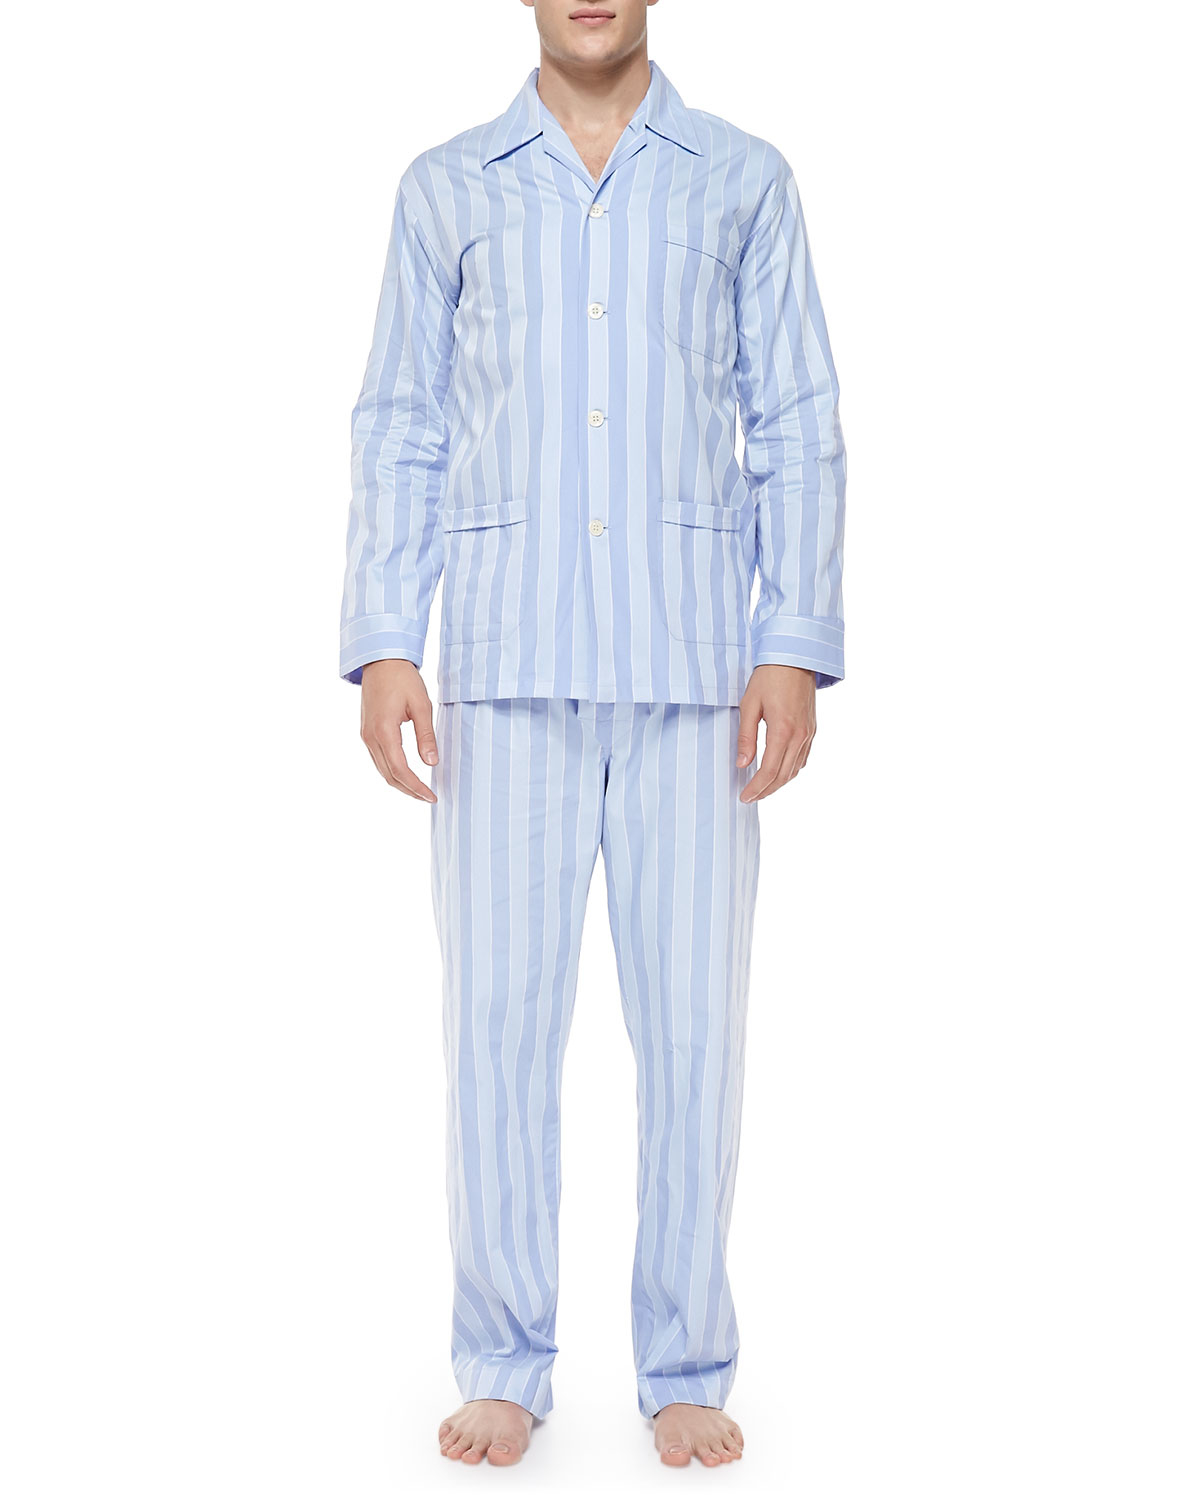 Lyst - Derek rose Men's Stripe Pajama Set in Blue for Men